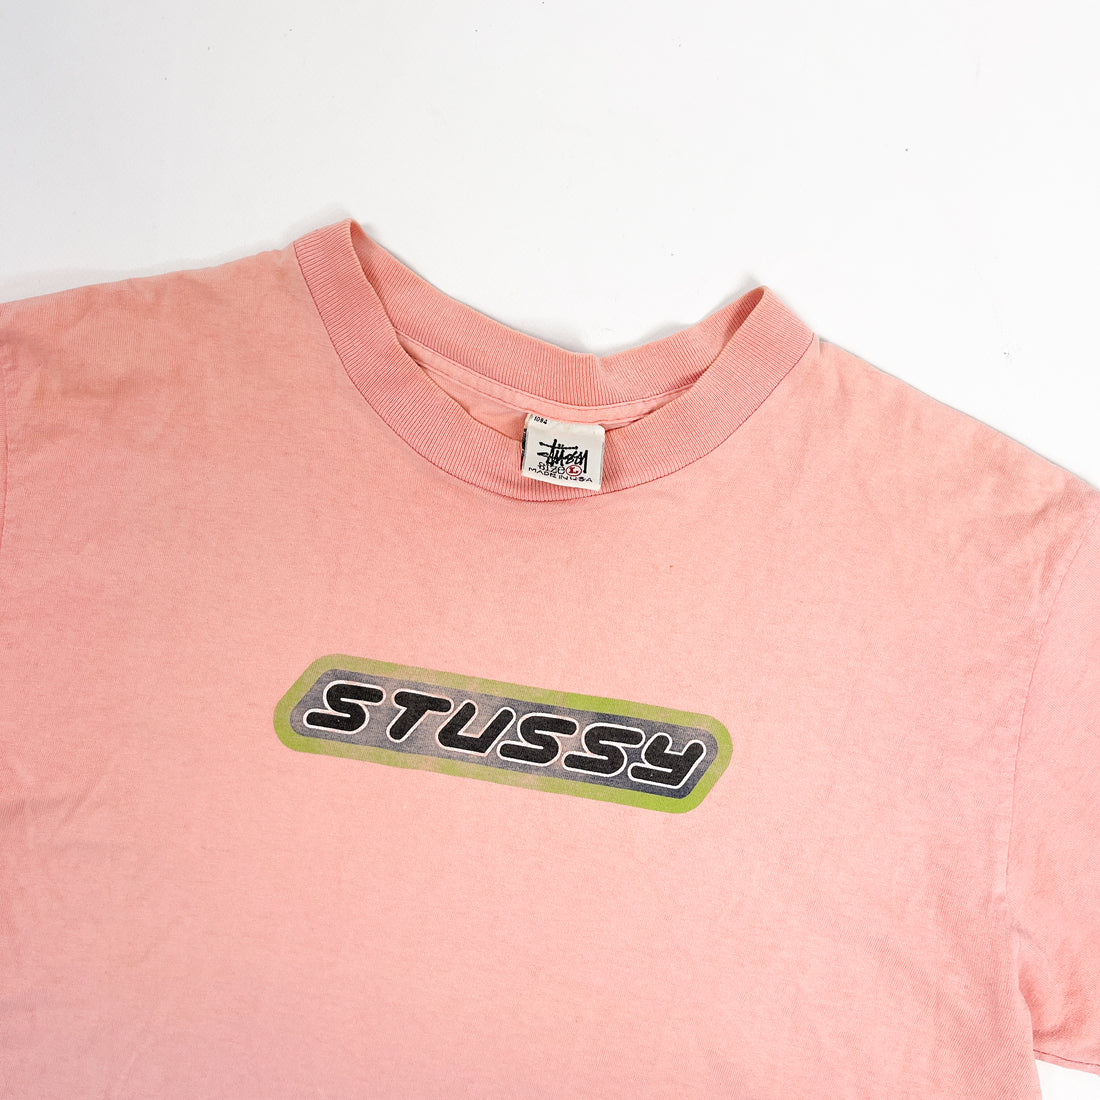 Stussy Made in USA Salmon Logo Tee 1980's